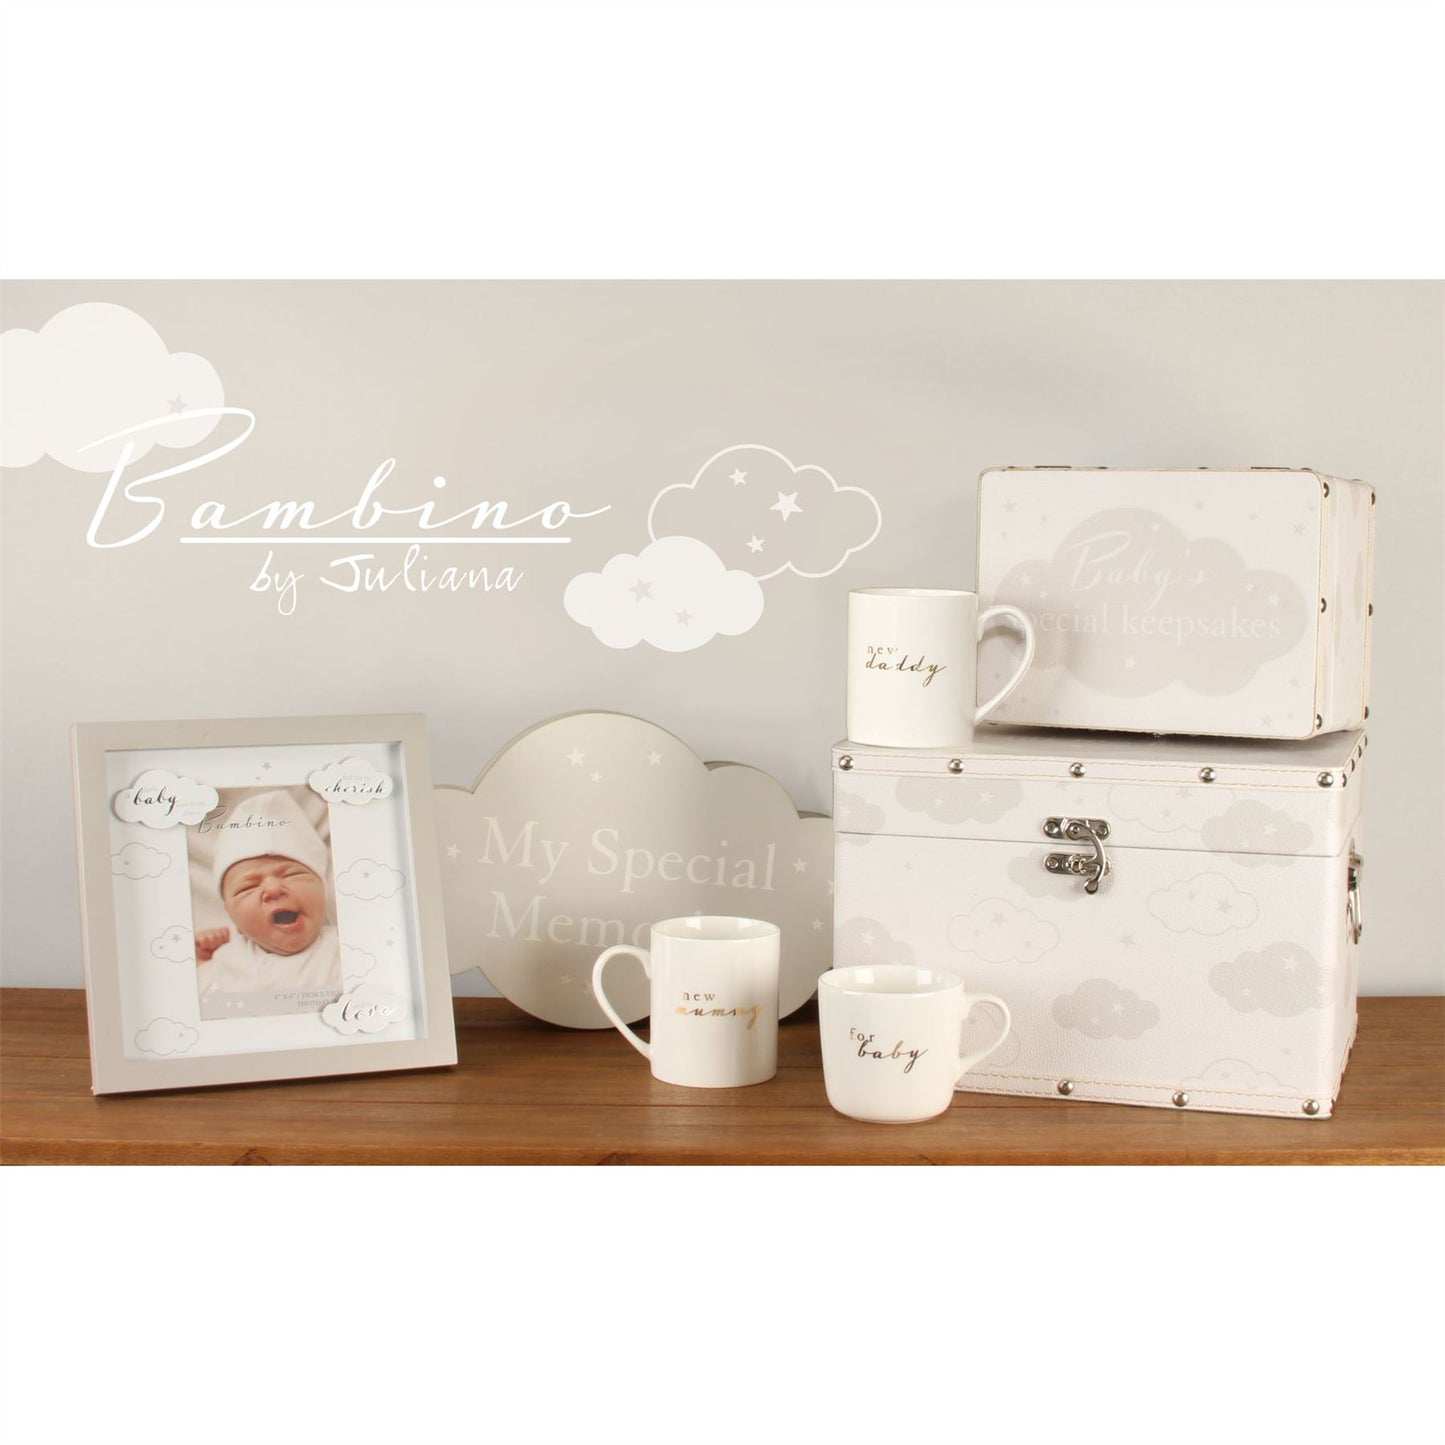 Bambino Gift Set of 3 - New Mummy, Daddy & Baby